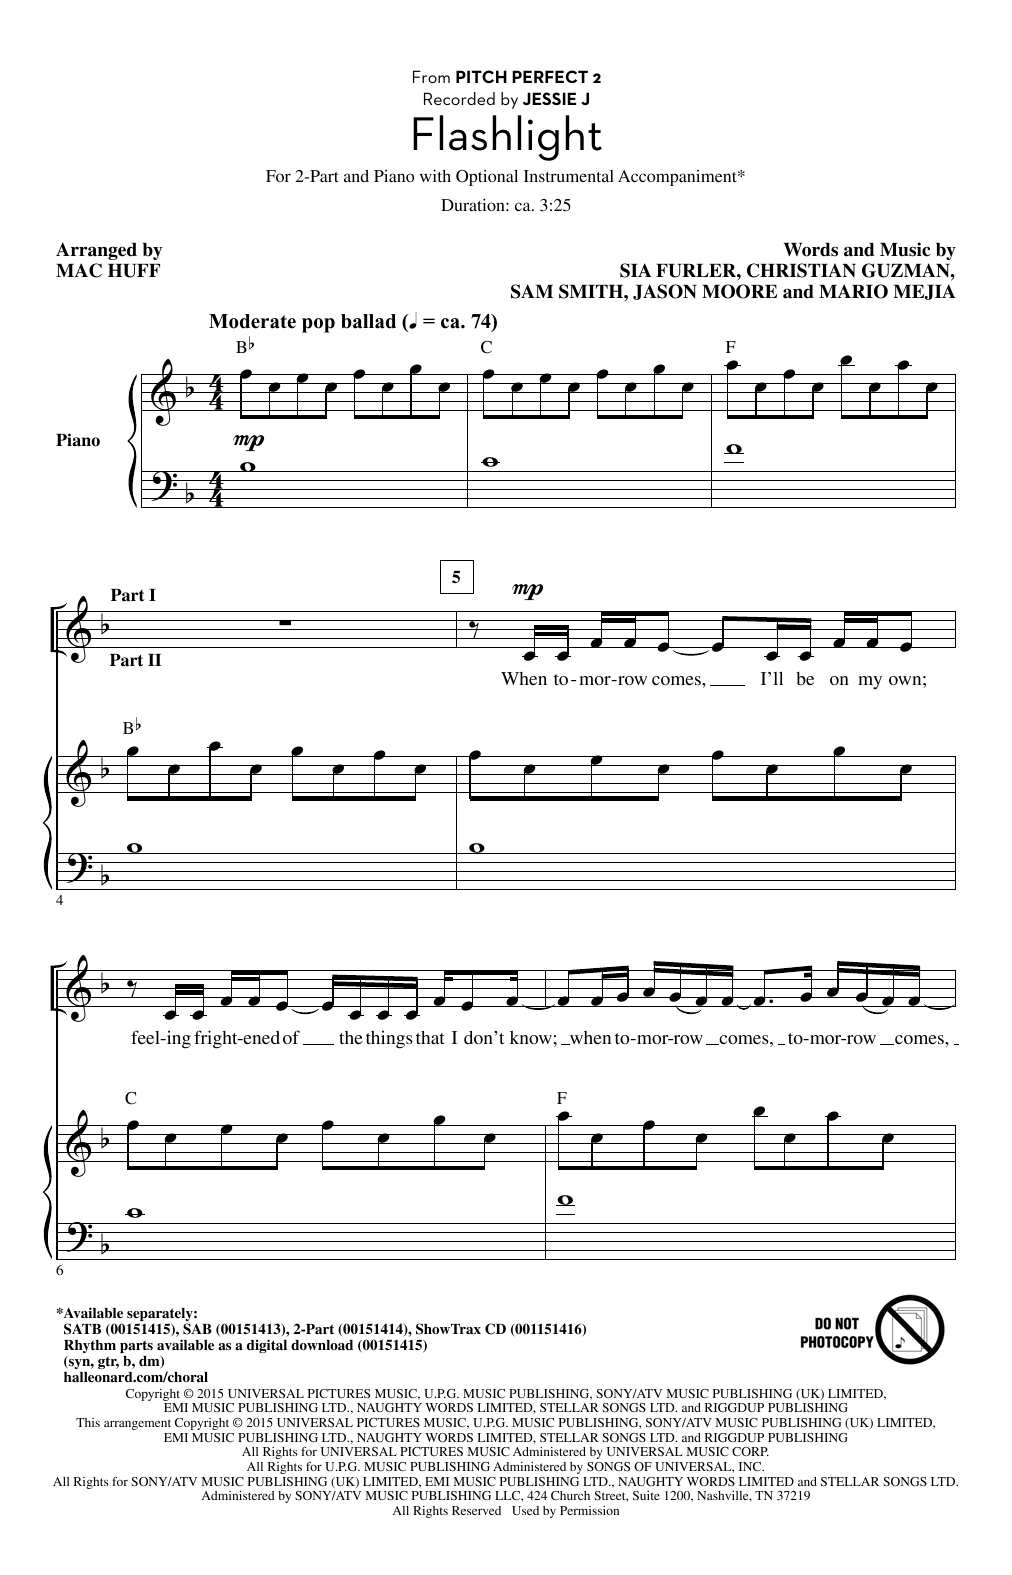 Jessie J Flashlight (arr. Mac Huff) Sheet Music Notes & Chords for 2-Part Choir - Download or Print PDF